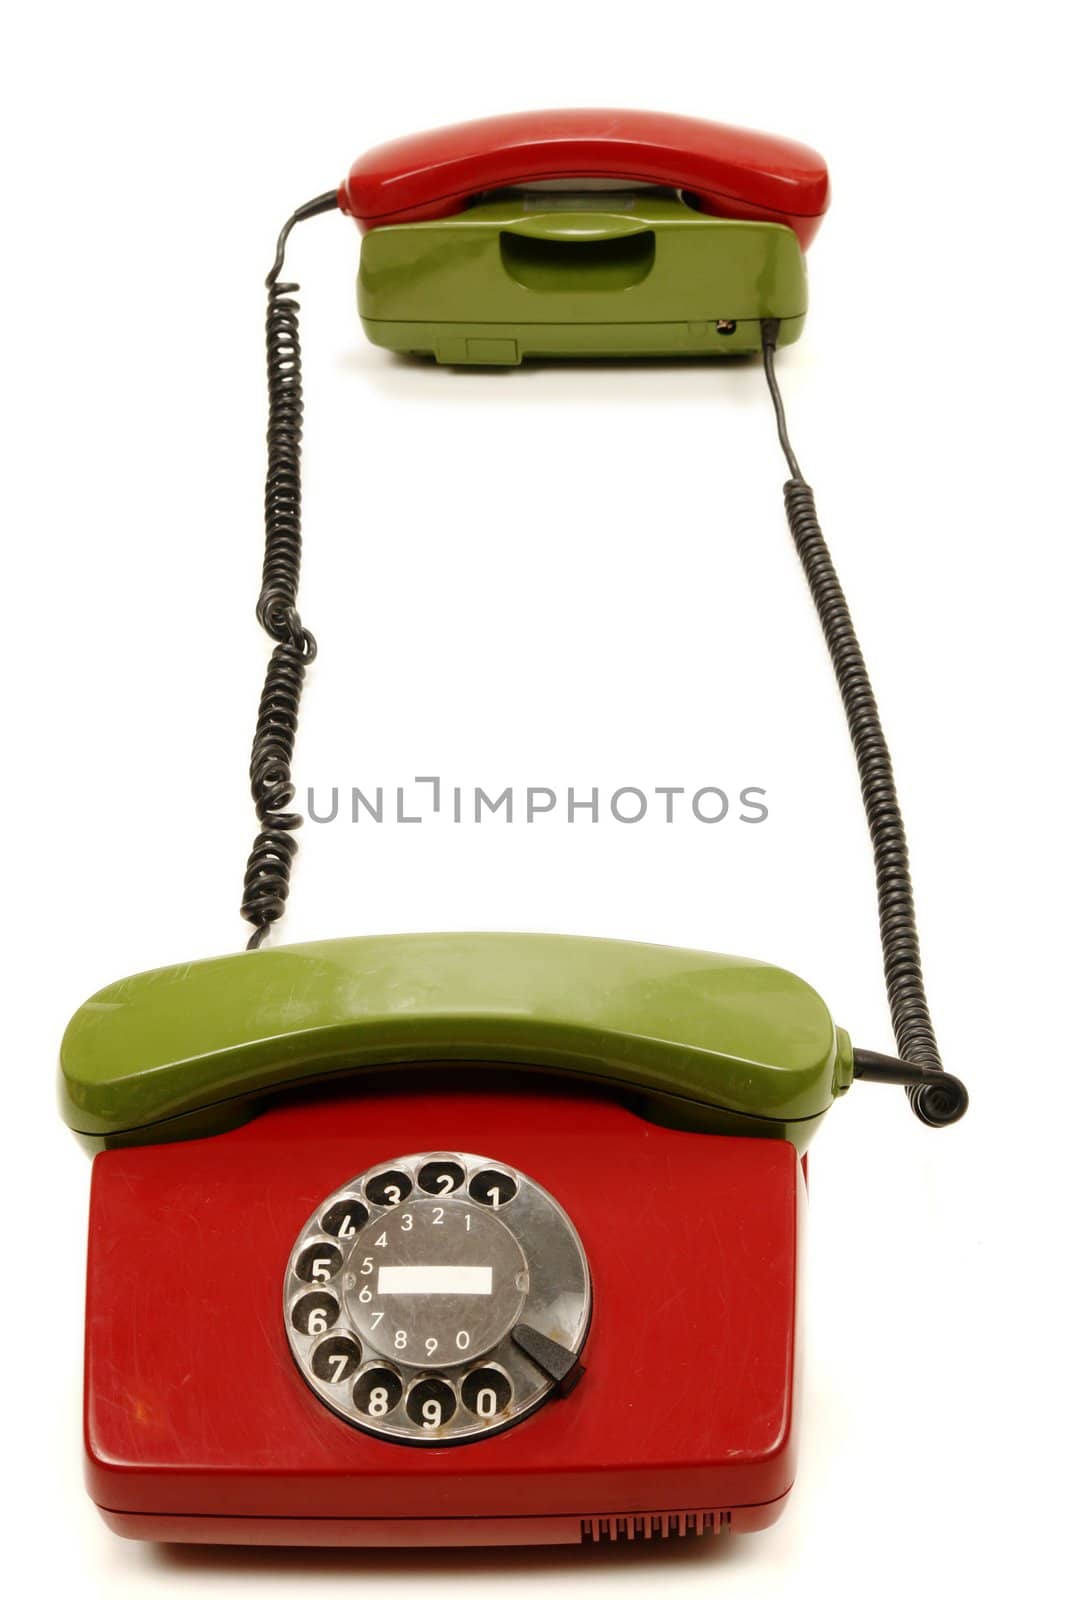 colourful retro phones symbolizing conference/teamwork/network............